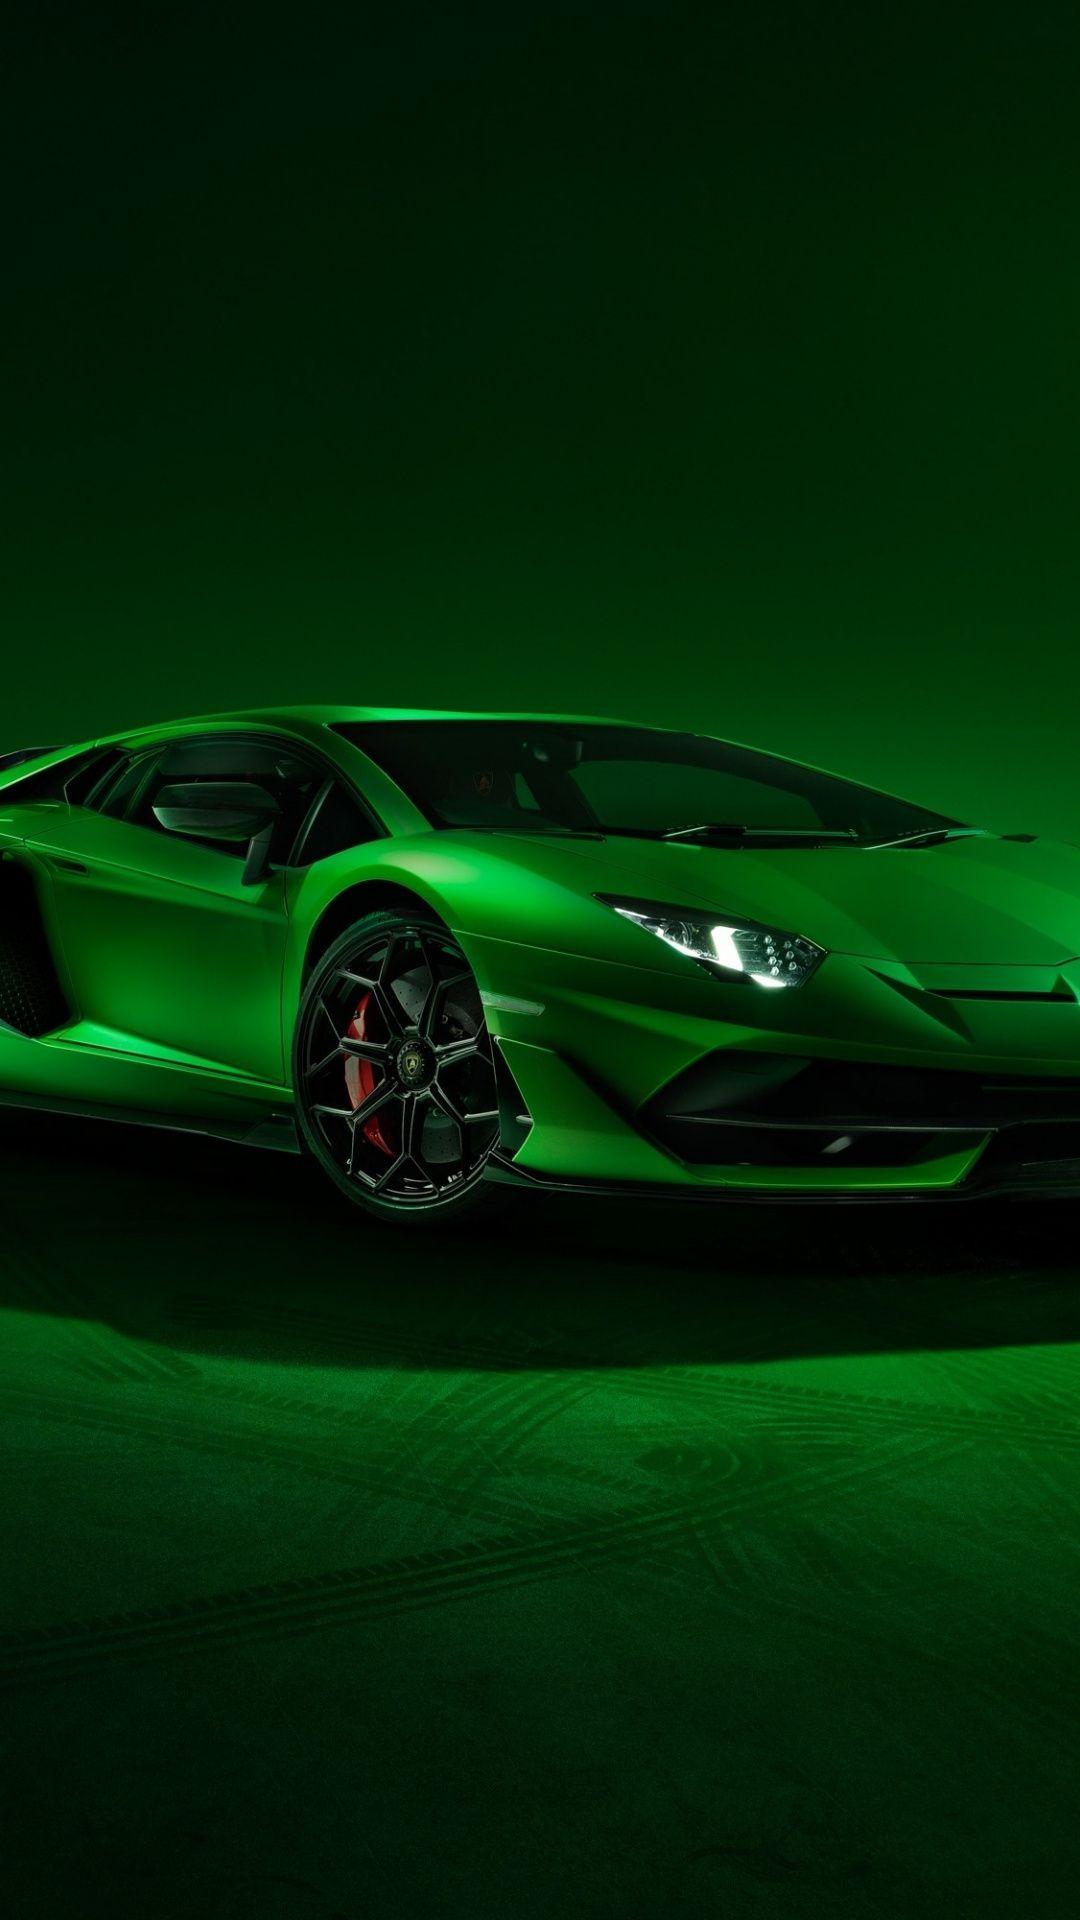 1080x1920 Green Lamborghini Huracan sports car wallpaper  Green  lamborghini Car wallpapers Lamborghini huracan